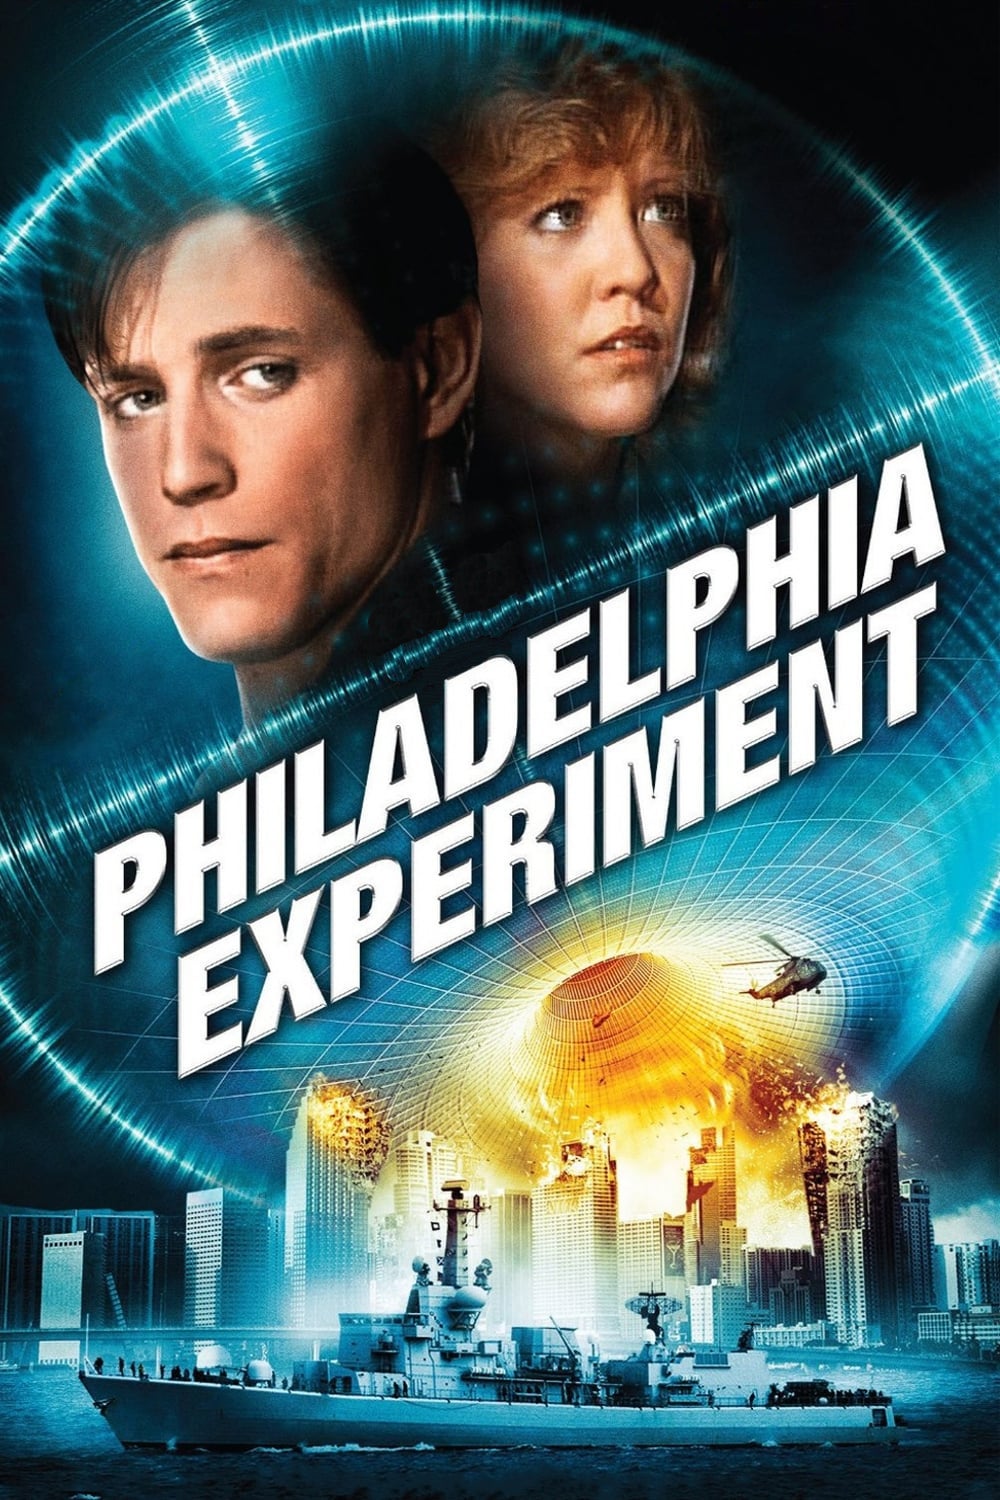 Philadelphia experiment [HD] (1984)